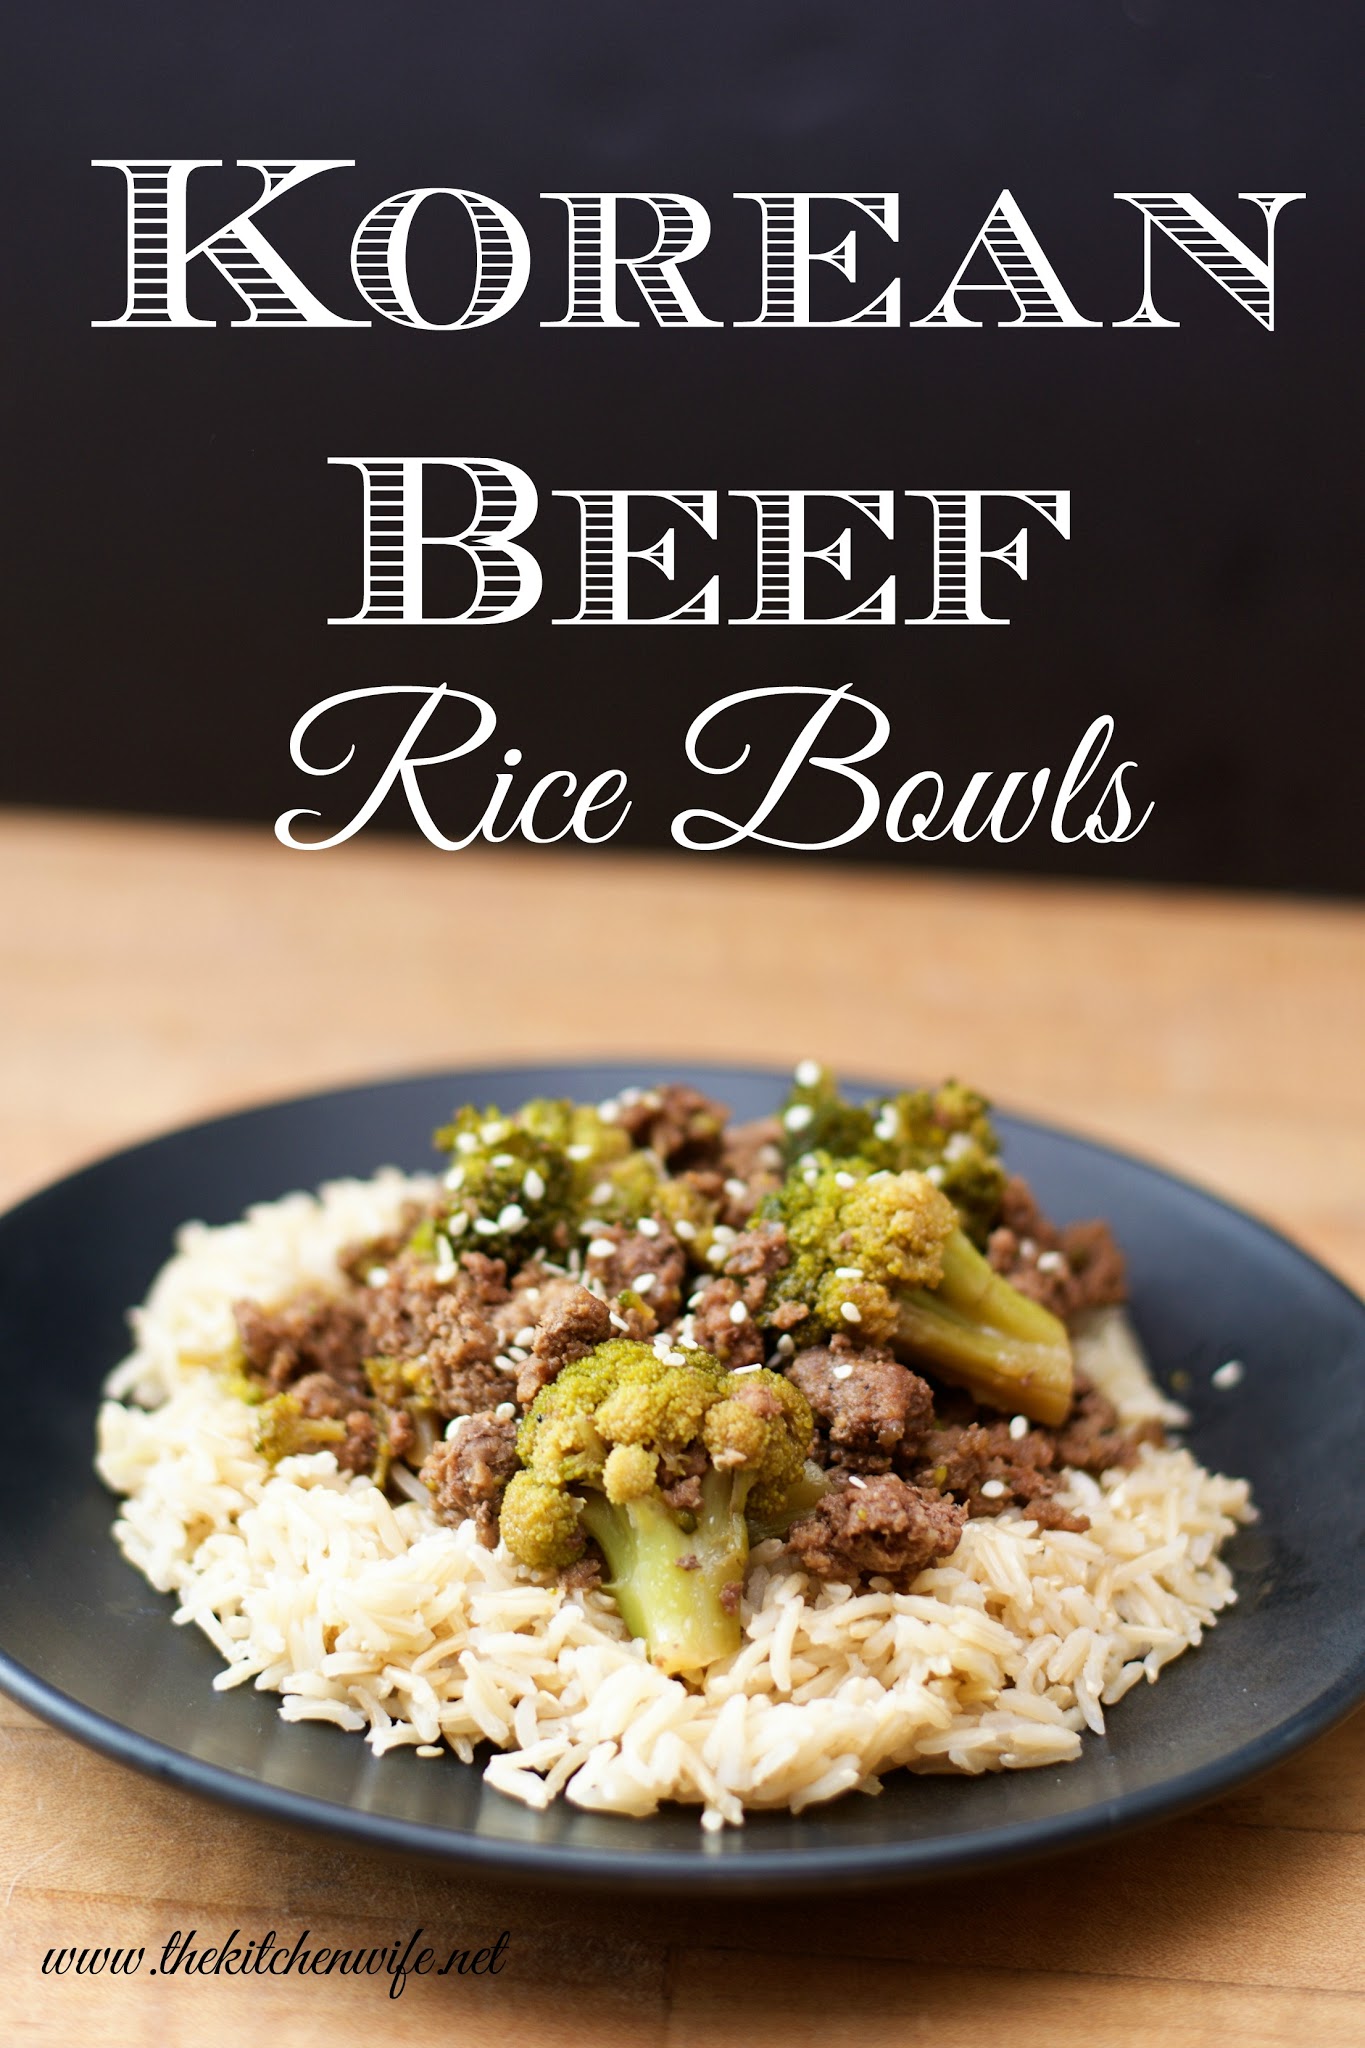 Easy Korean Beef Rice Bowl Recipe